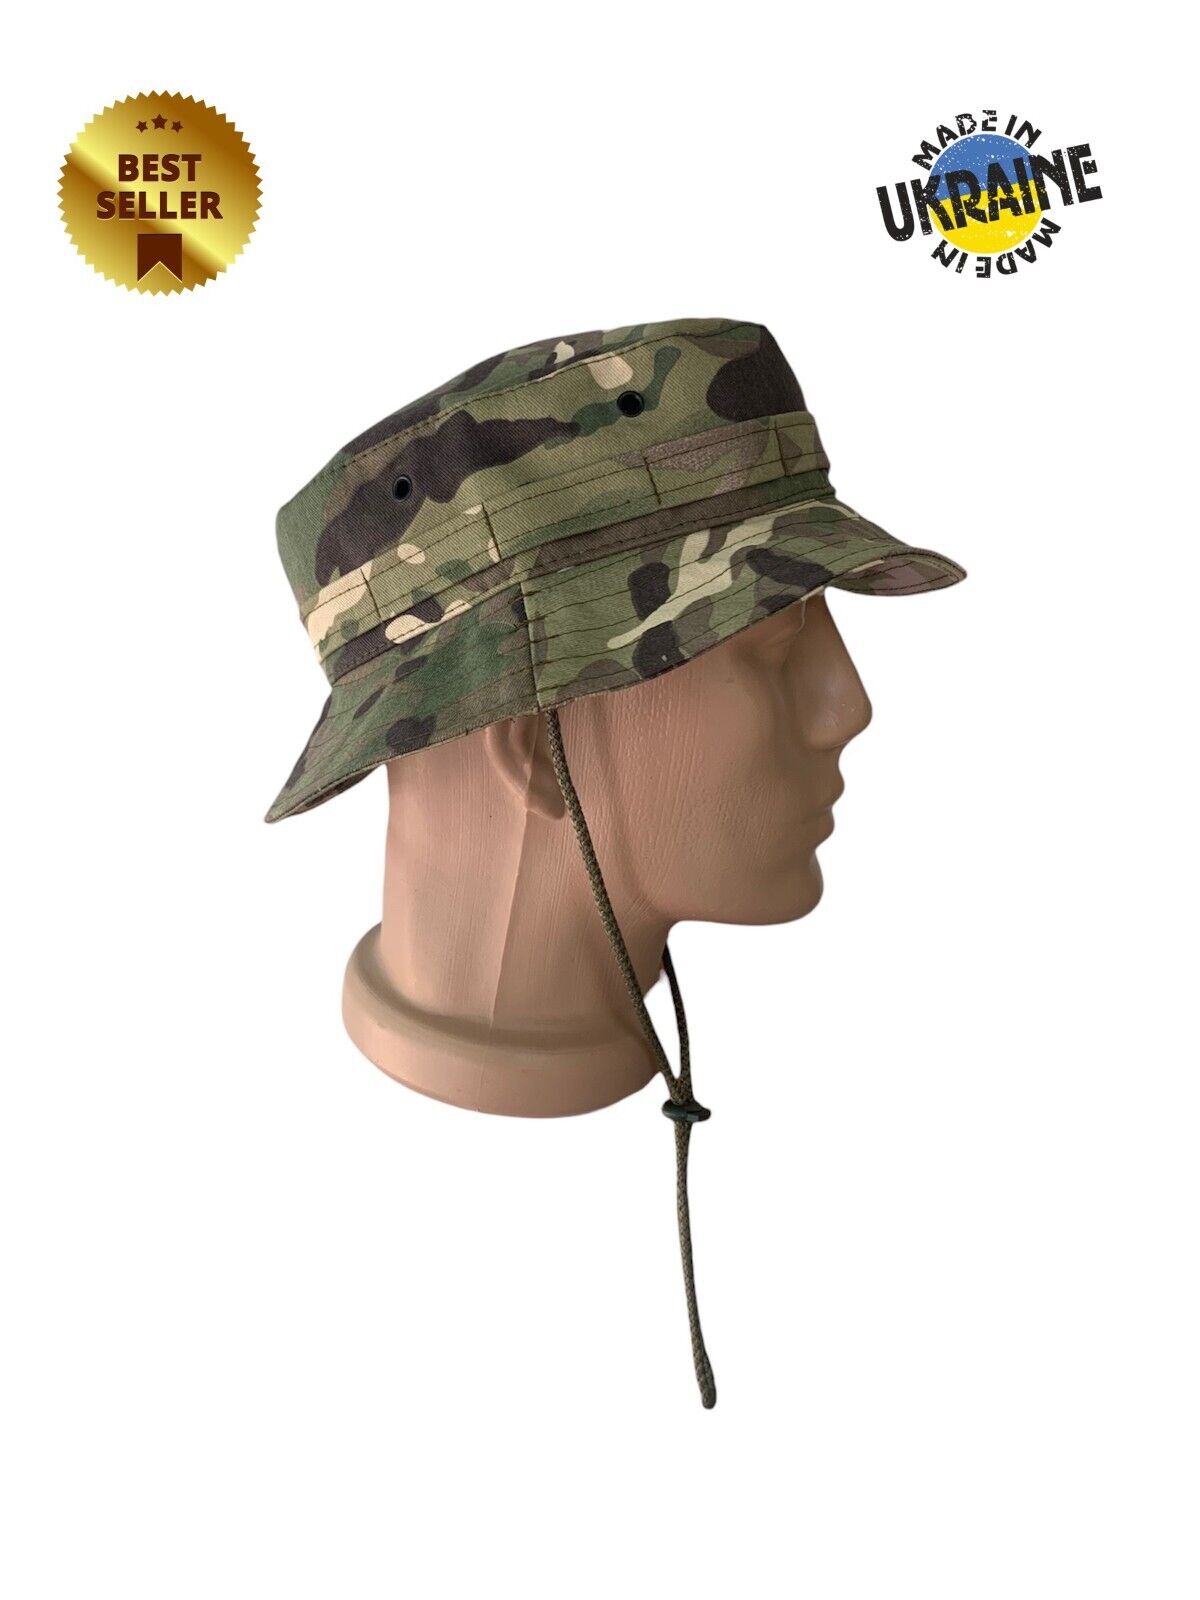 Mil-Spec. Ukrainian military airborne  forces boonie hat \